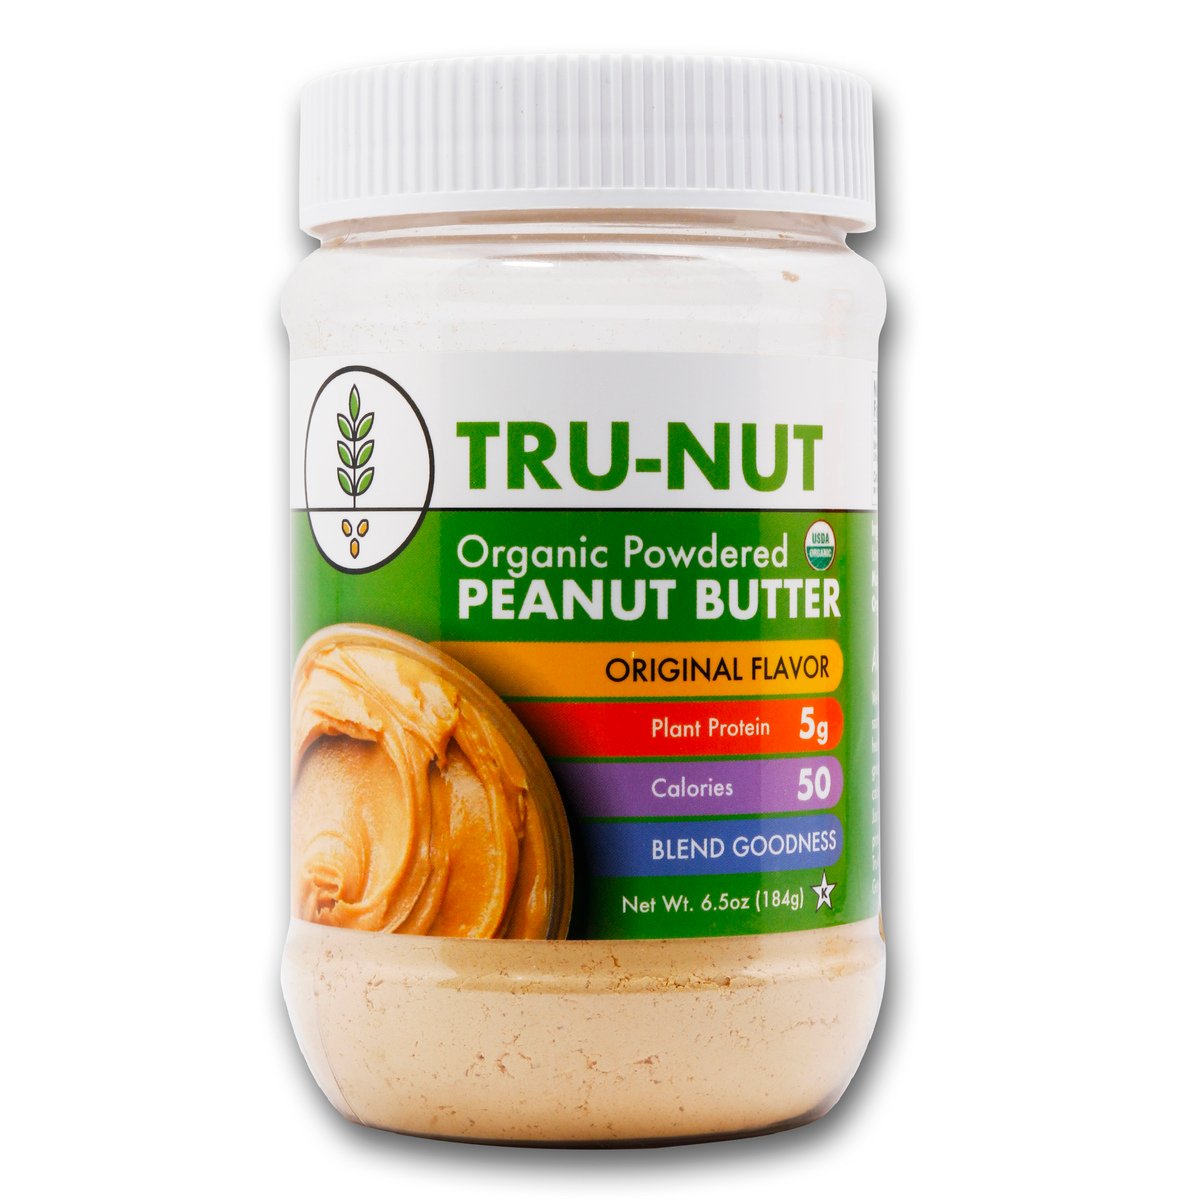 Powdered Peanut Butter < Tru-Nut